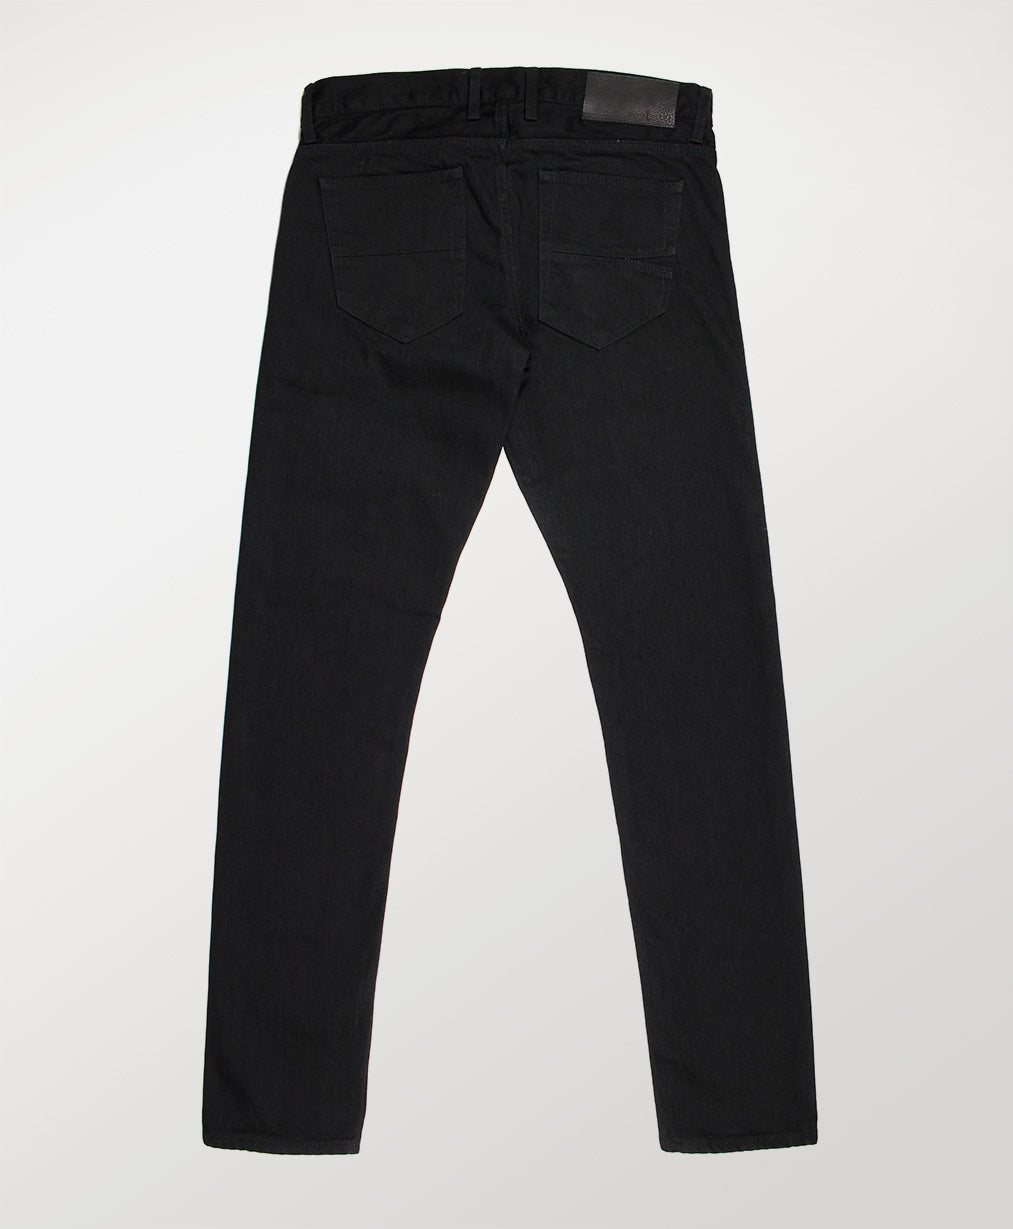 Mill Row - Rinse Stretch Black Denim Jeans